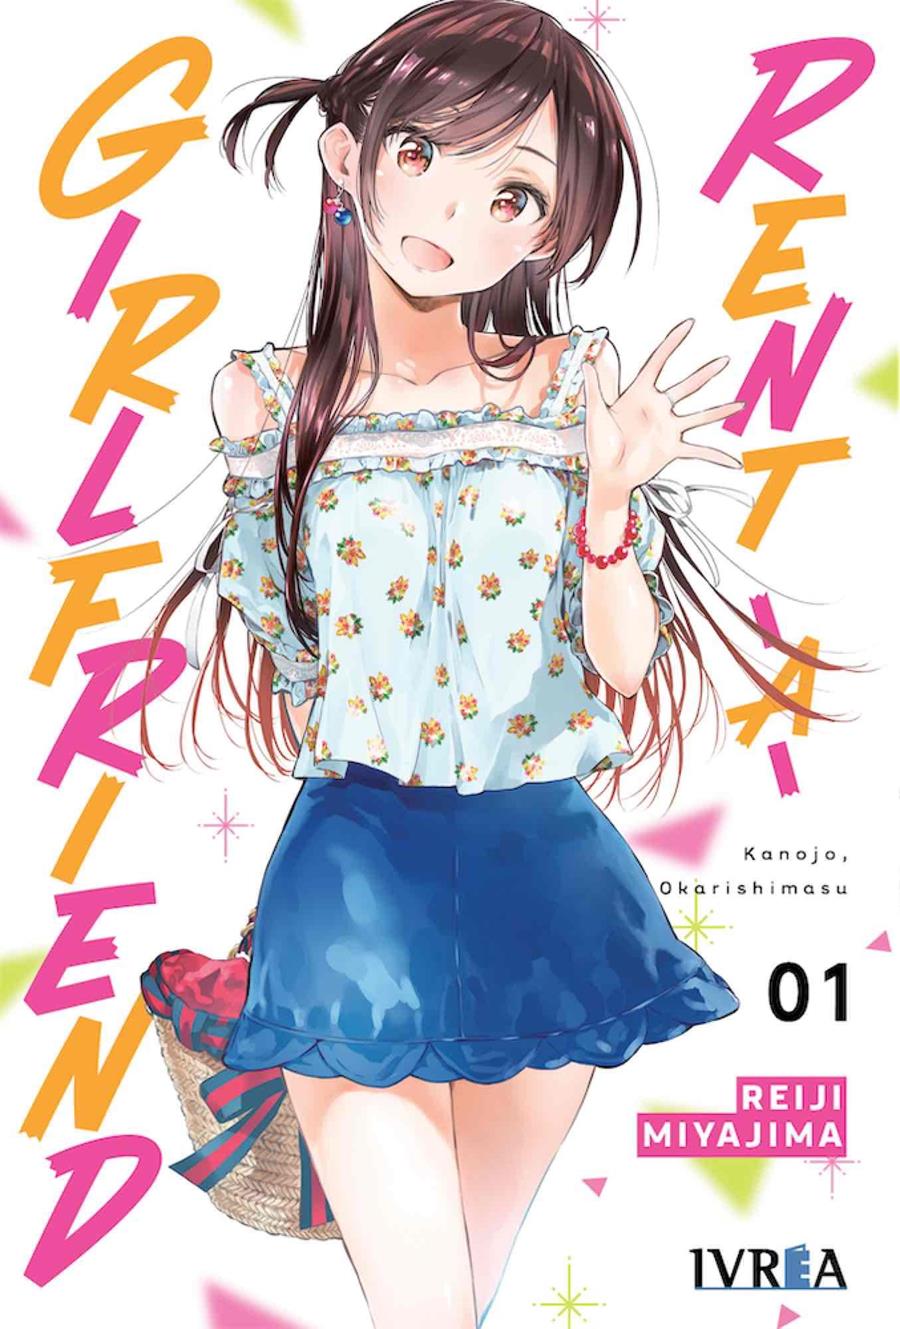 Rent-a-girlfriend 01 | N0321-IVR10 | Reiji Miyajima | Terra de Còmic - Tu tienda de cómics online especializada en cómics, manga y merchandising